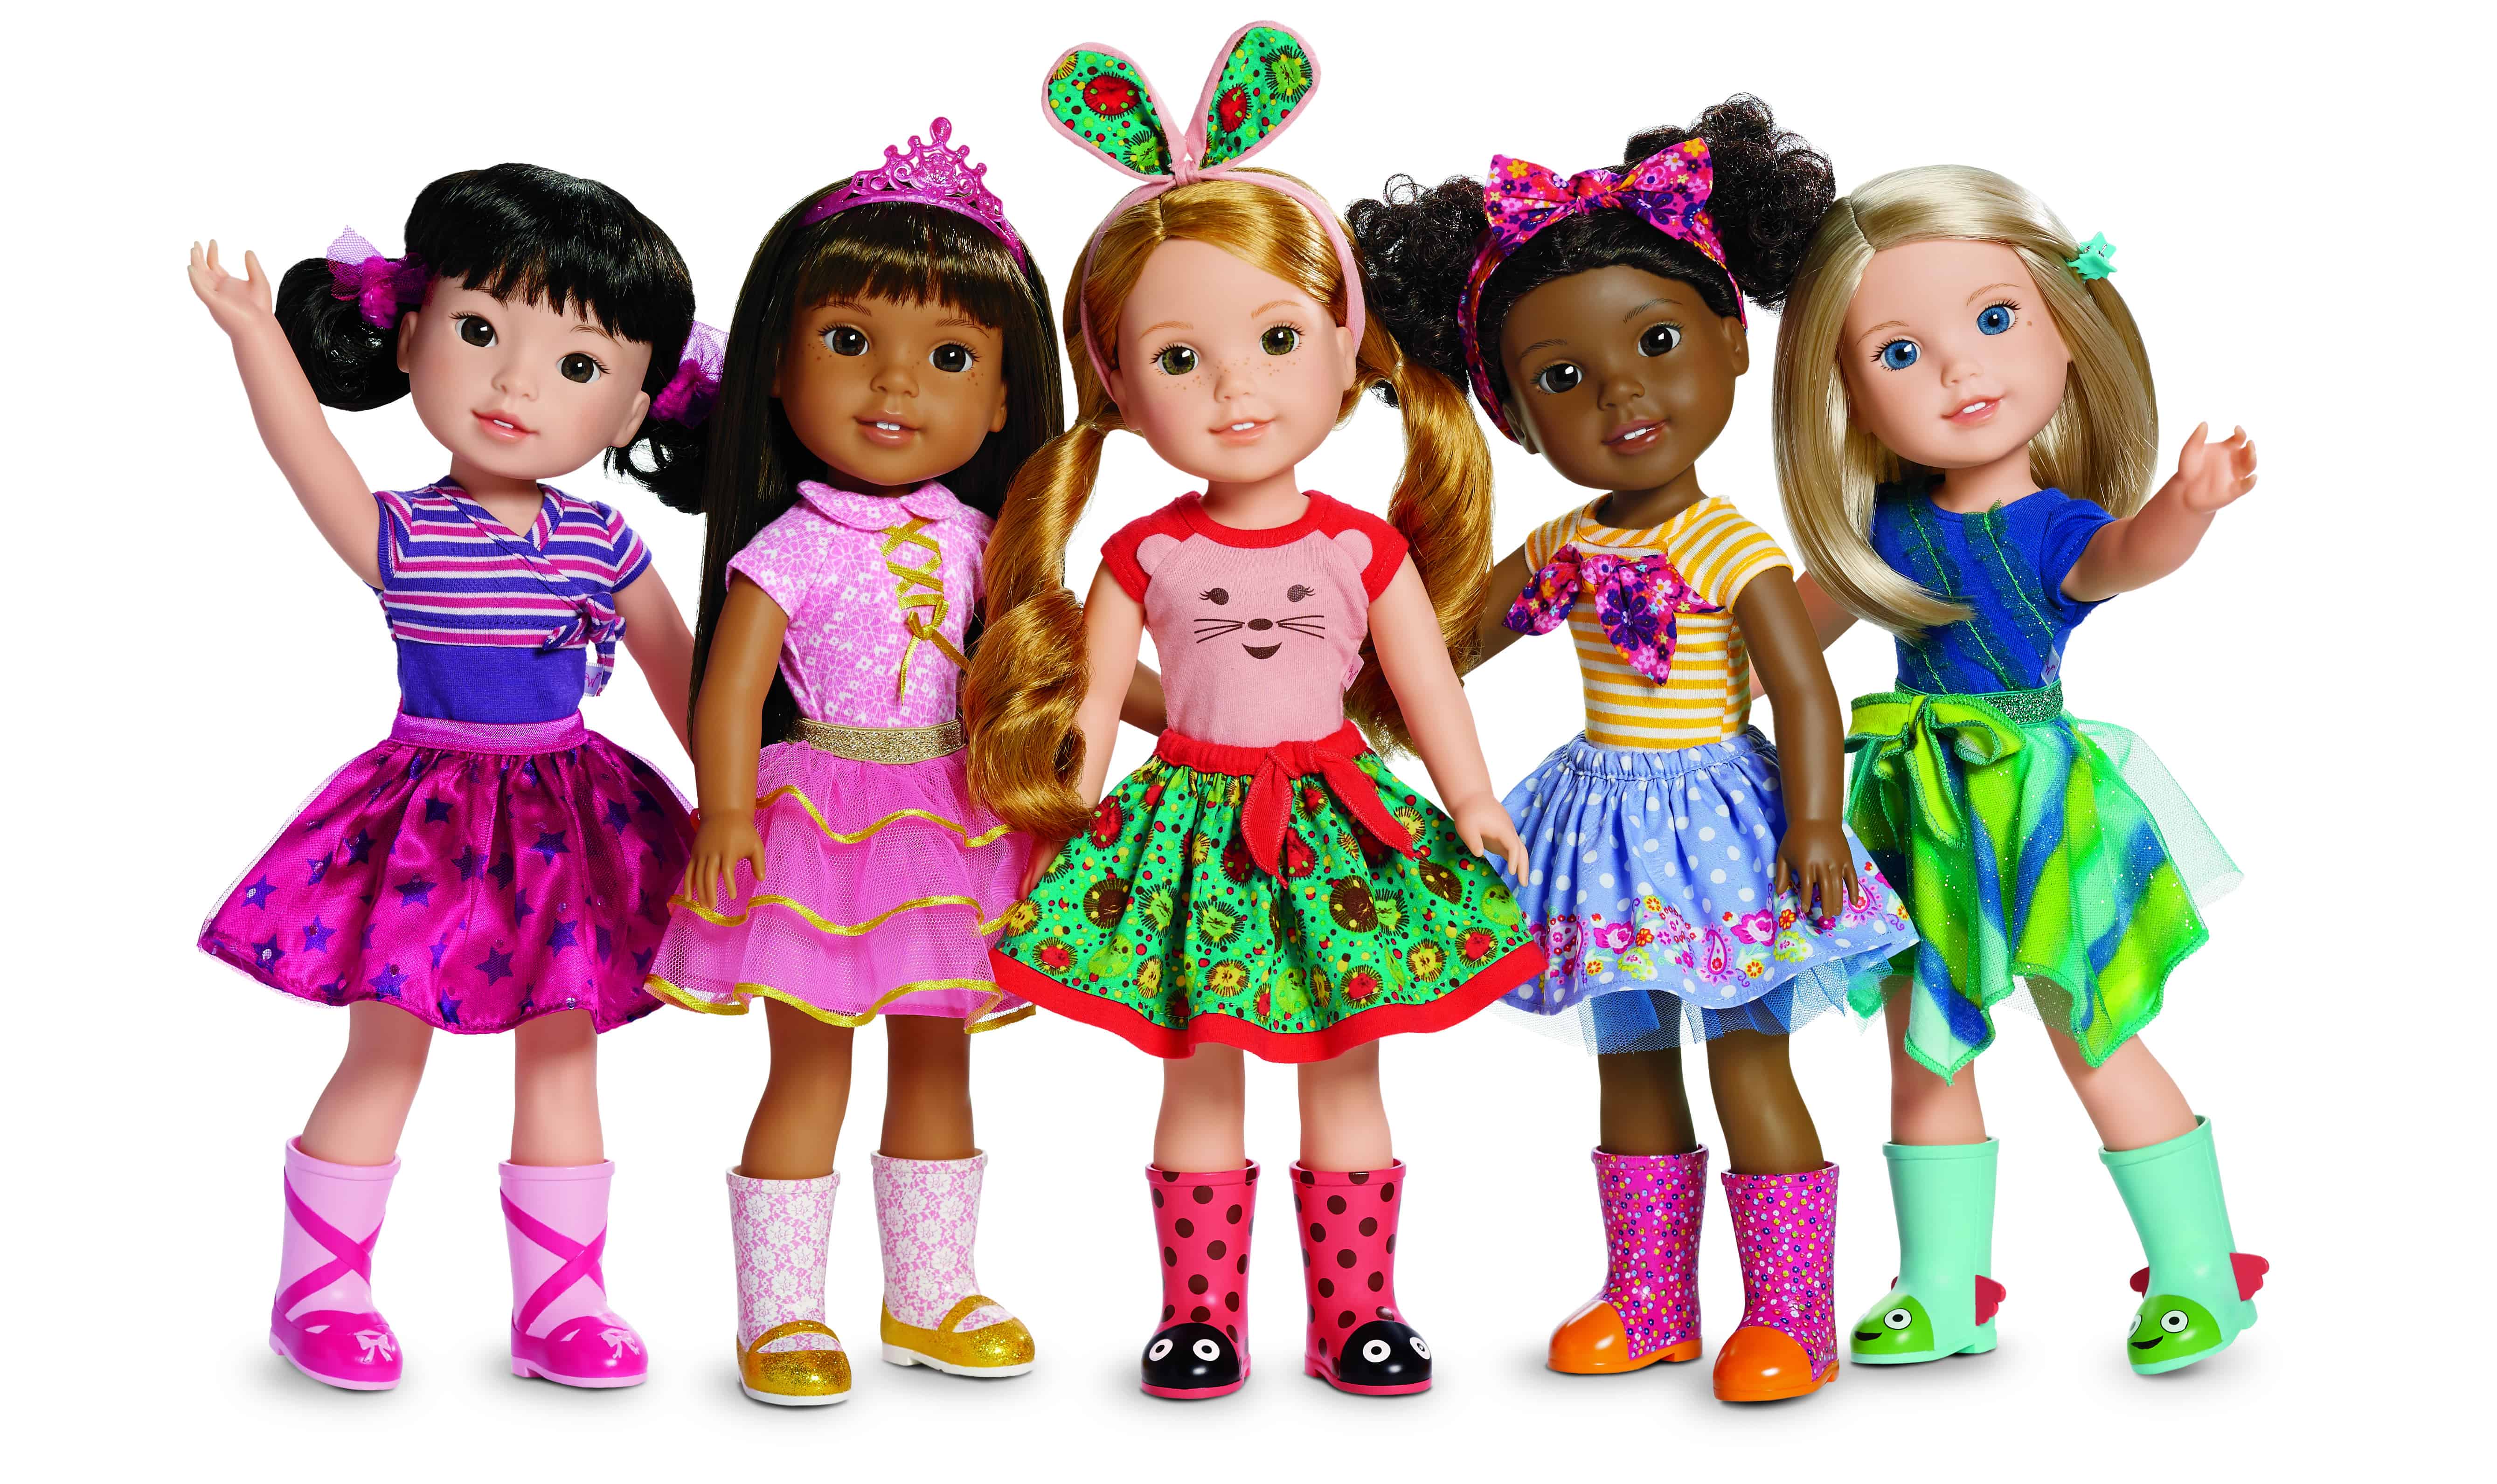 Игрушка кукла человек. Американ гёрл. Куклы для девочек. Современные куклы. Популярные куклы.